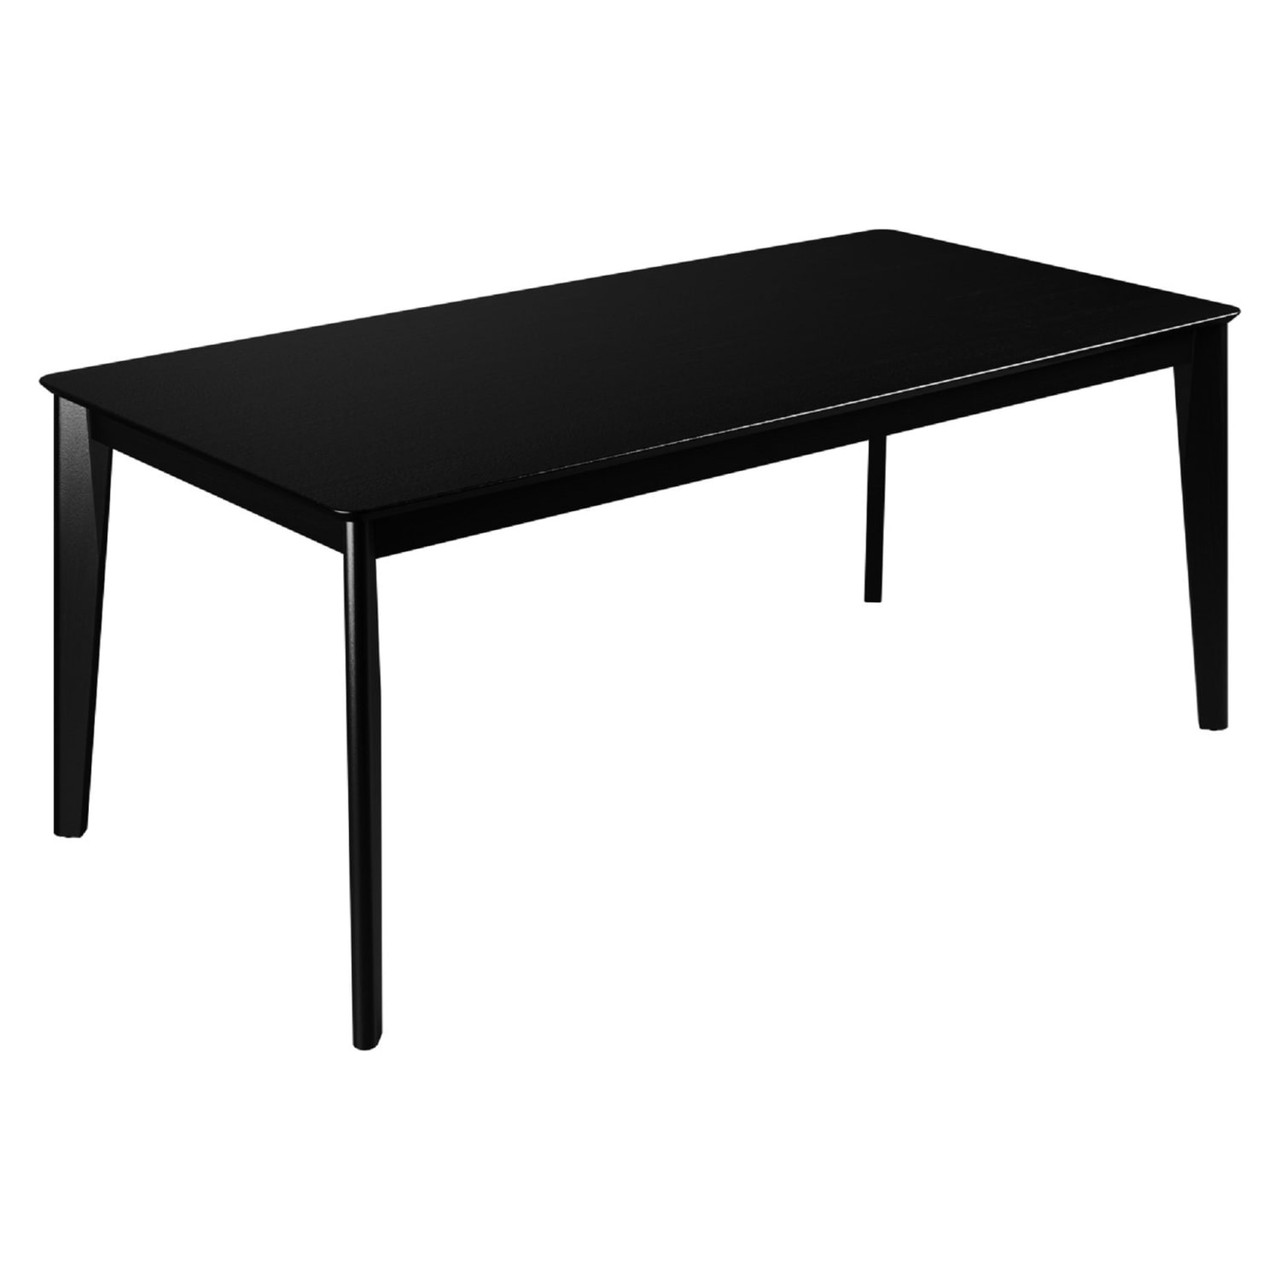 Tudor 70.86” Dining Table  in Black